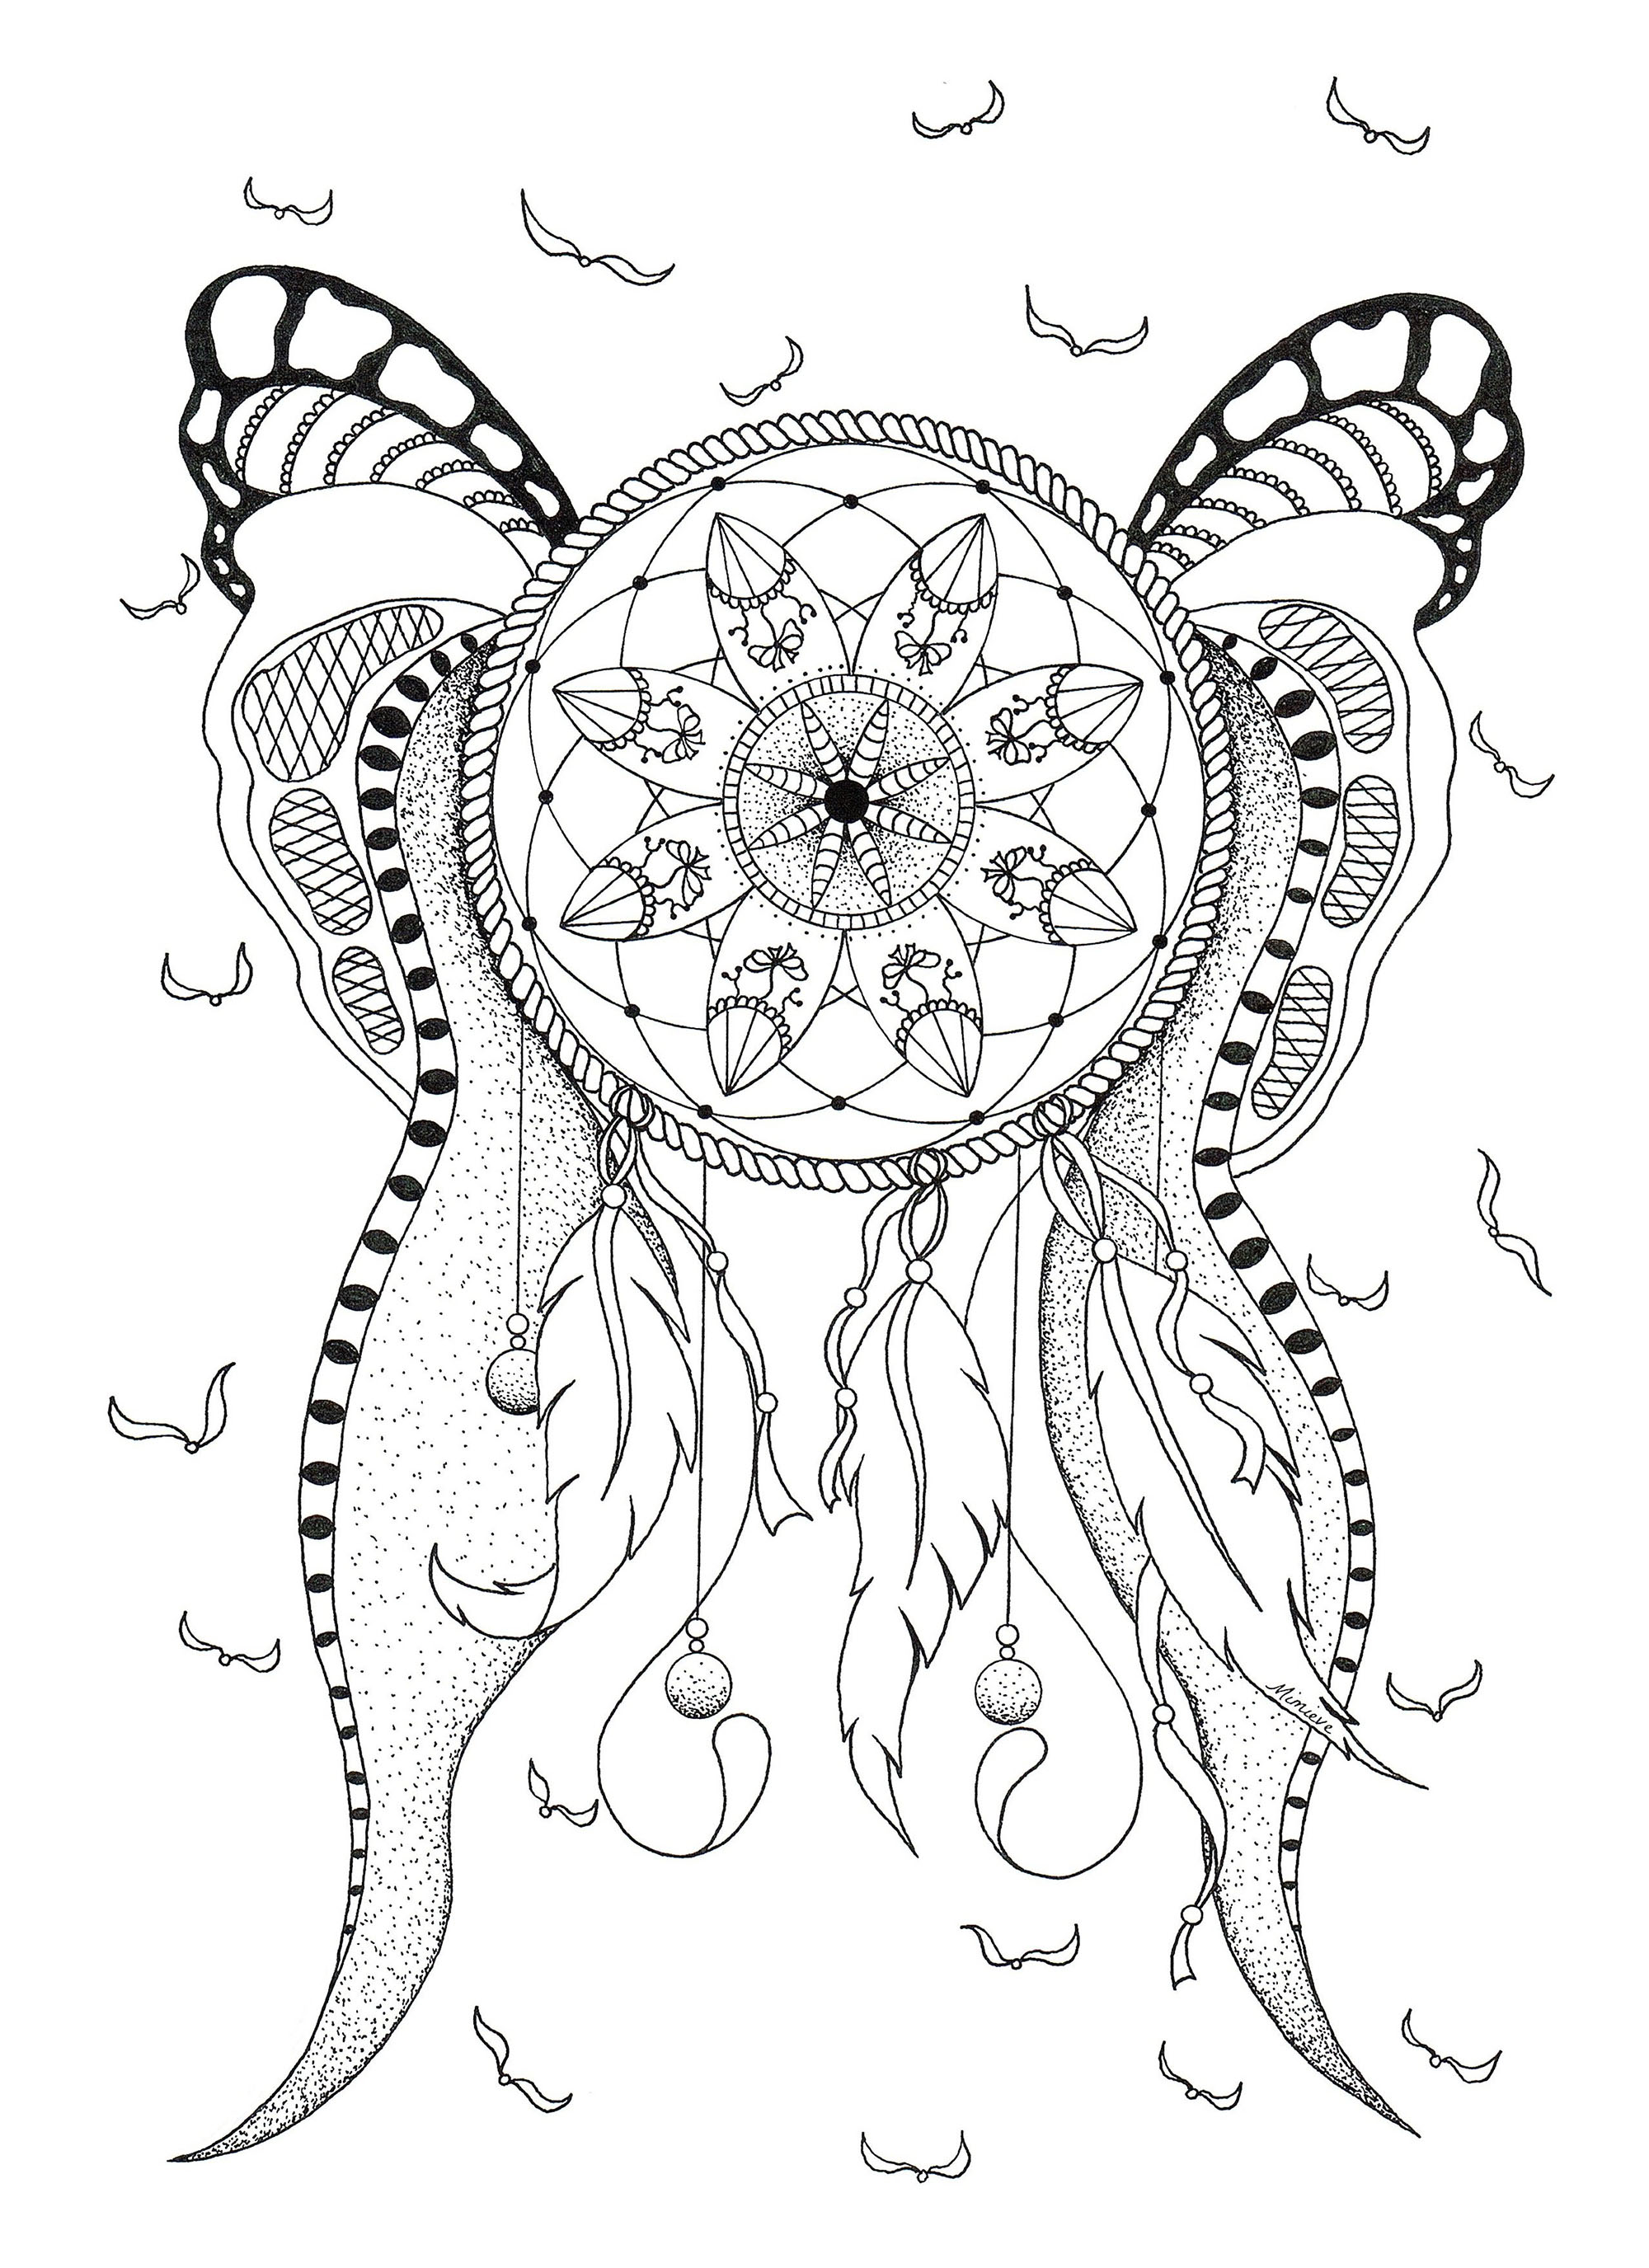 Desenhos incríveis para colorir de Dreamcatchers para imprimir e colorir, Artista : Mimieve